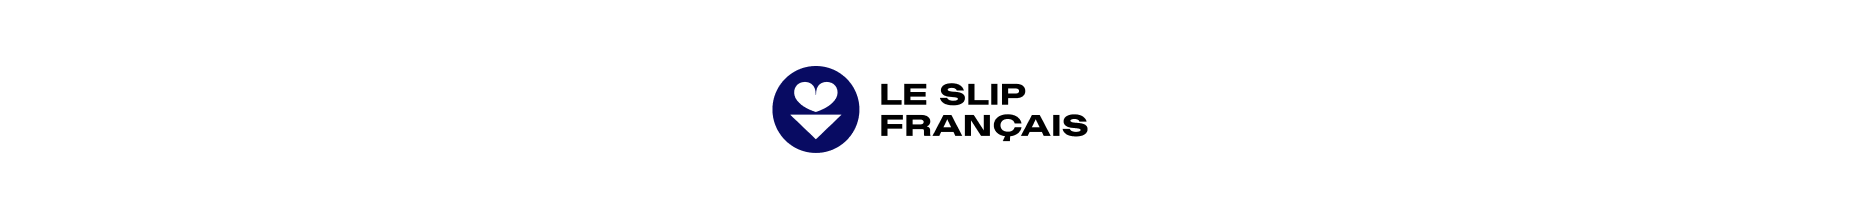 LE SLIP FRANCAIS.FR logo